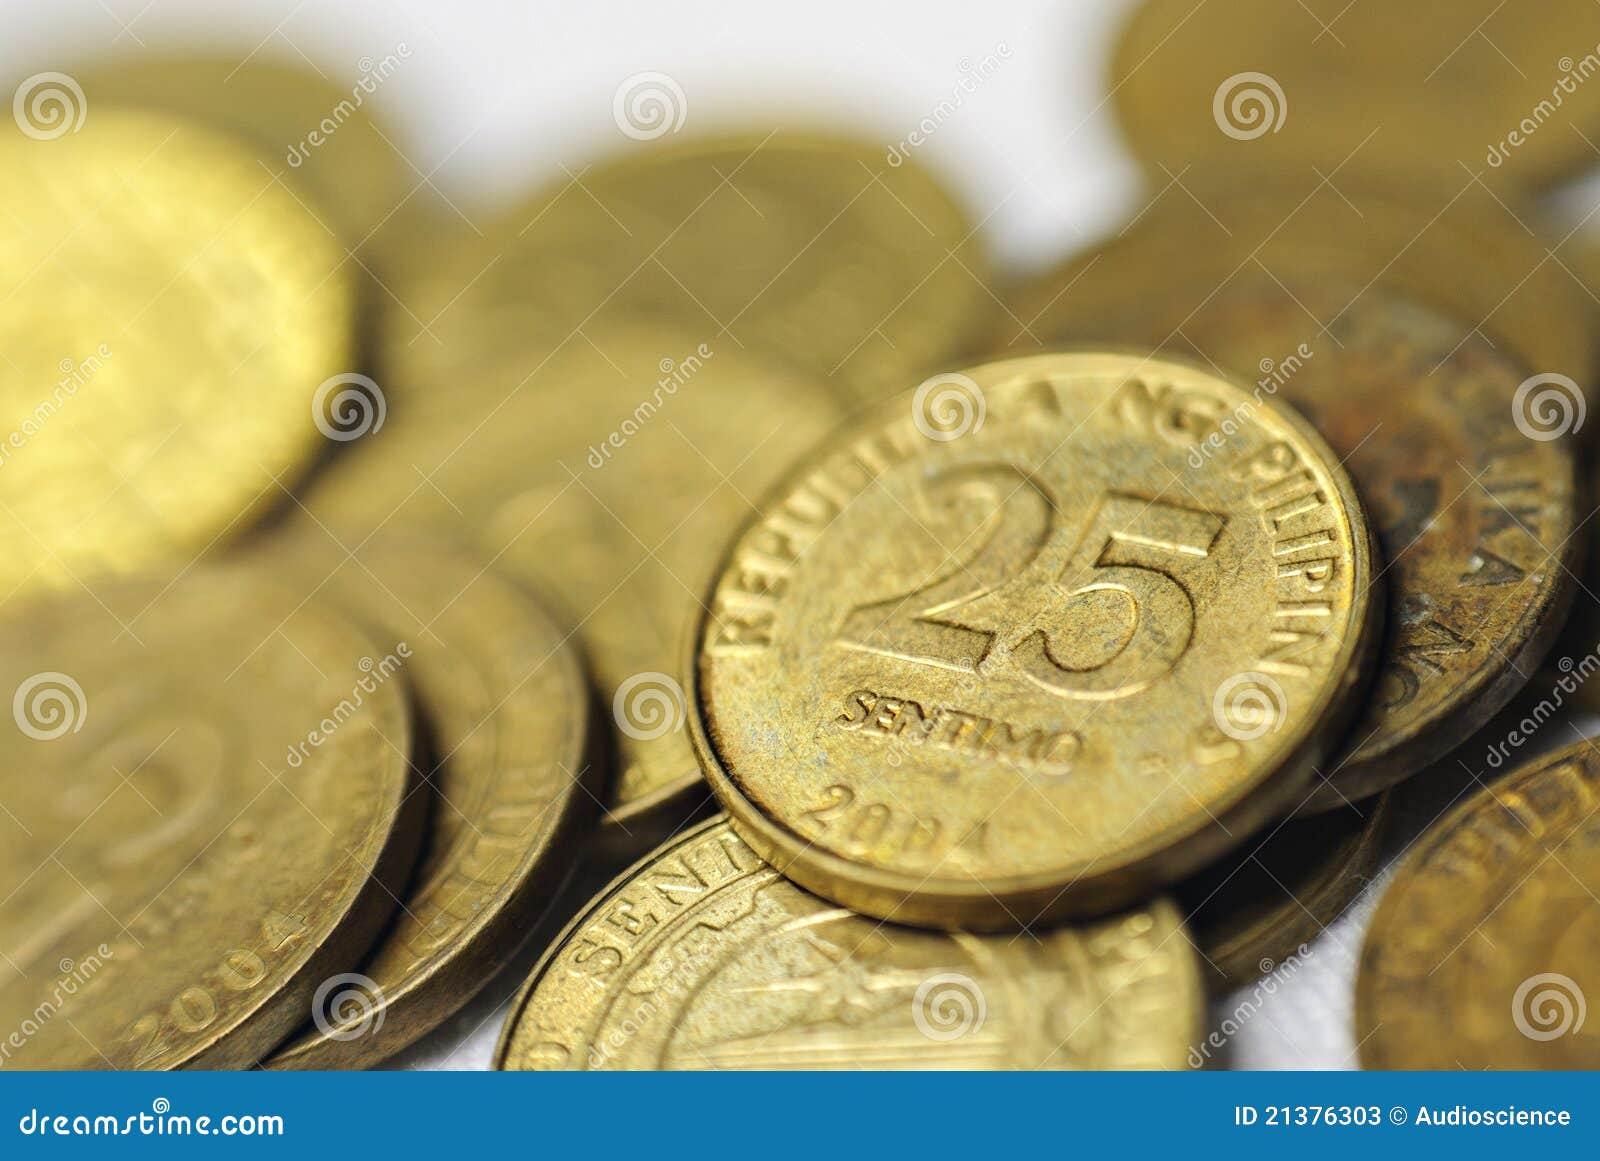 25 Centavo Philippine Coins Stock Photos - Image: 21376303